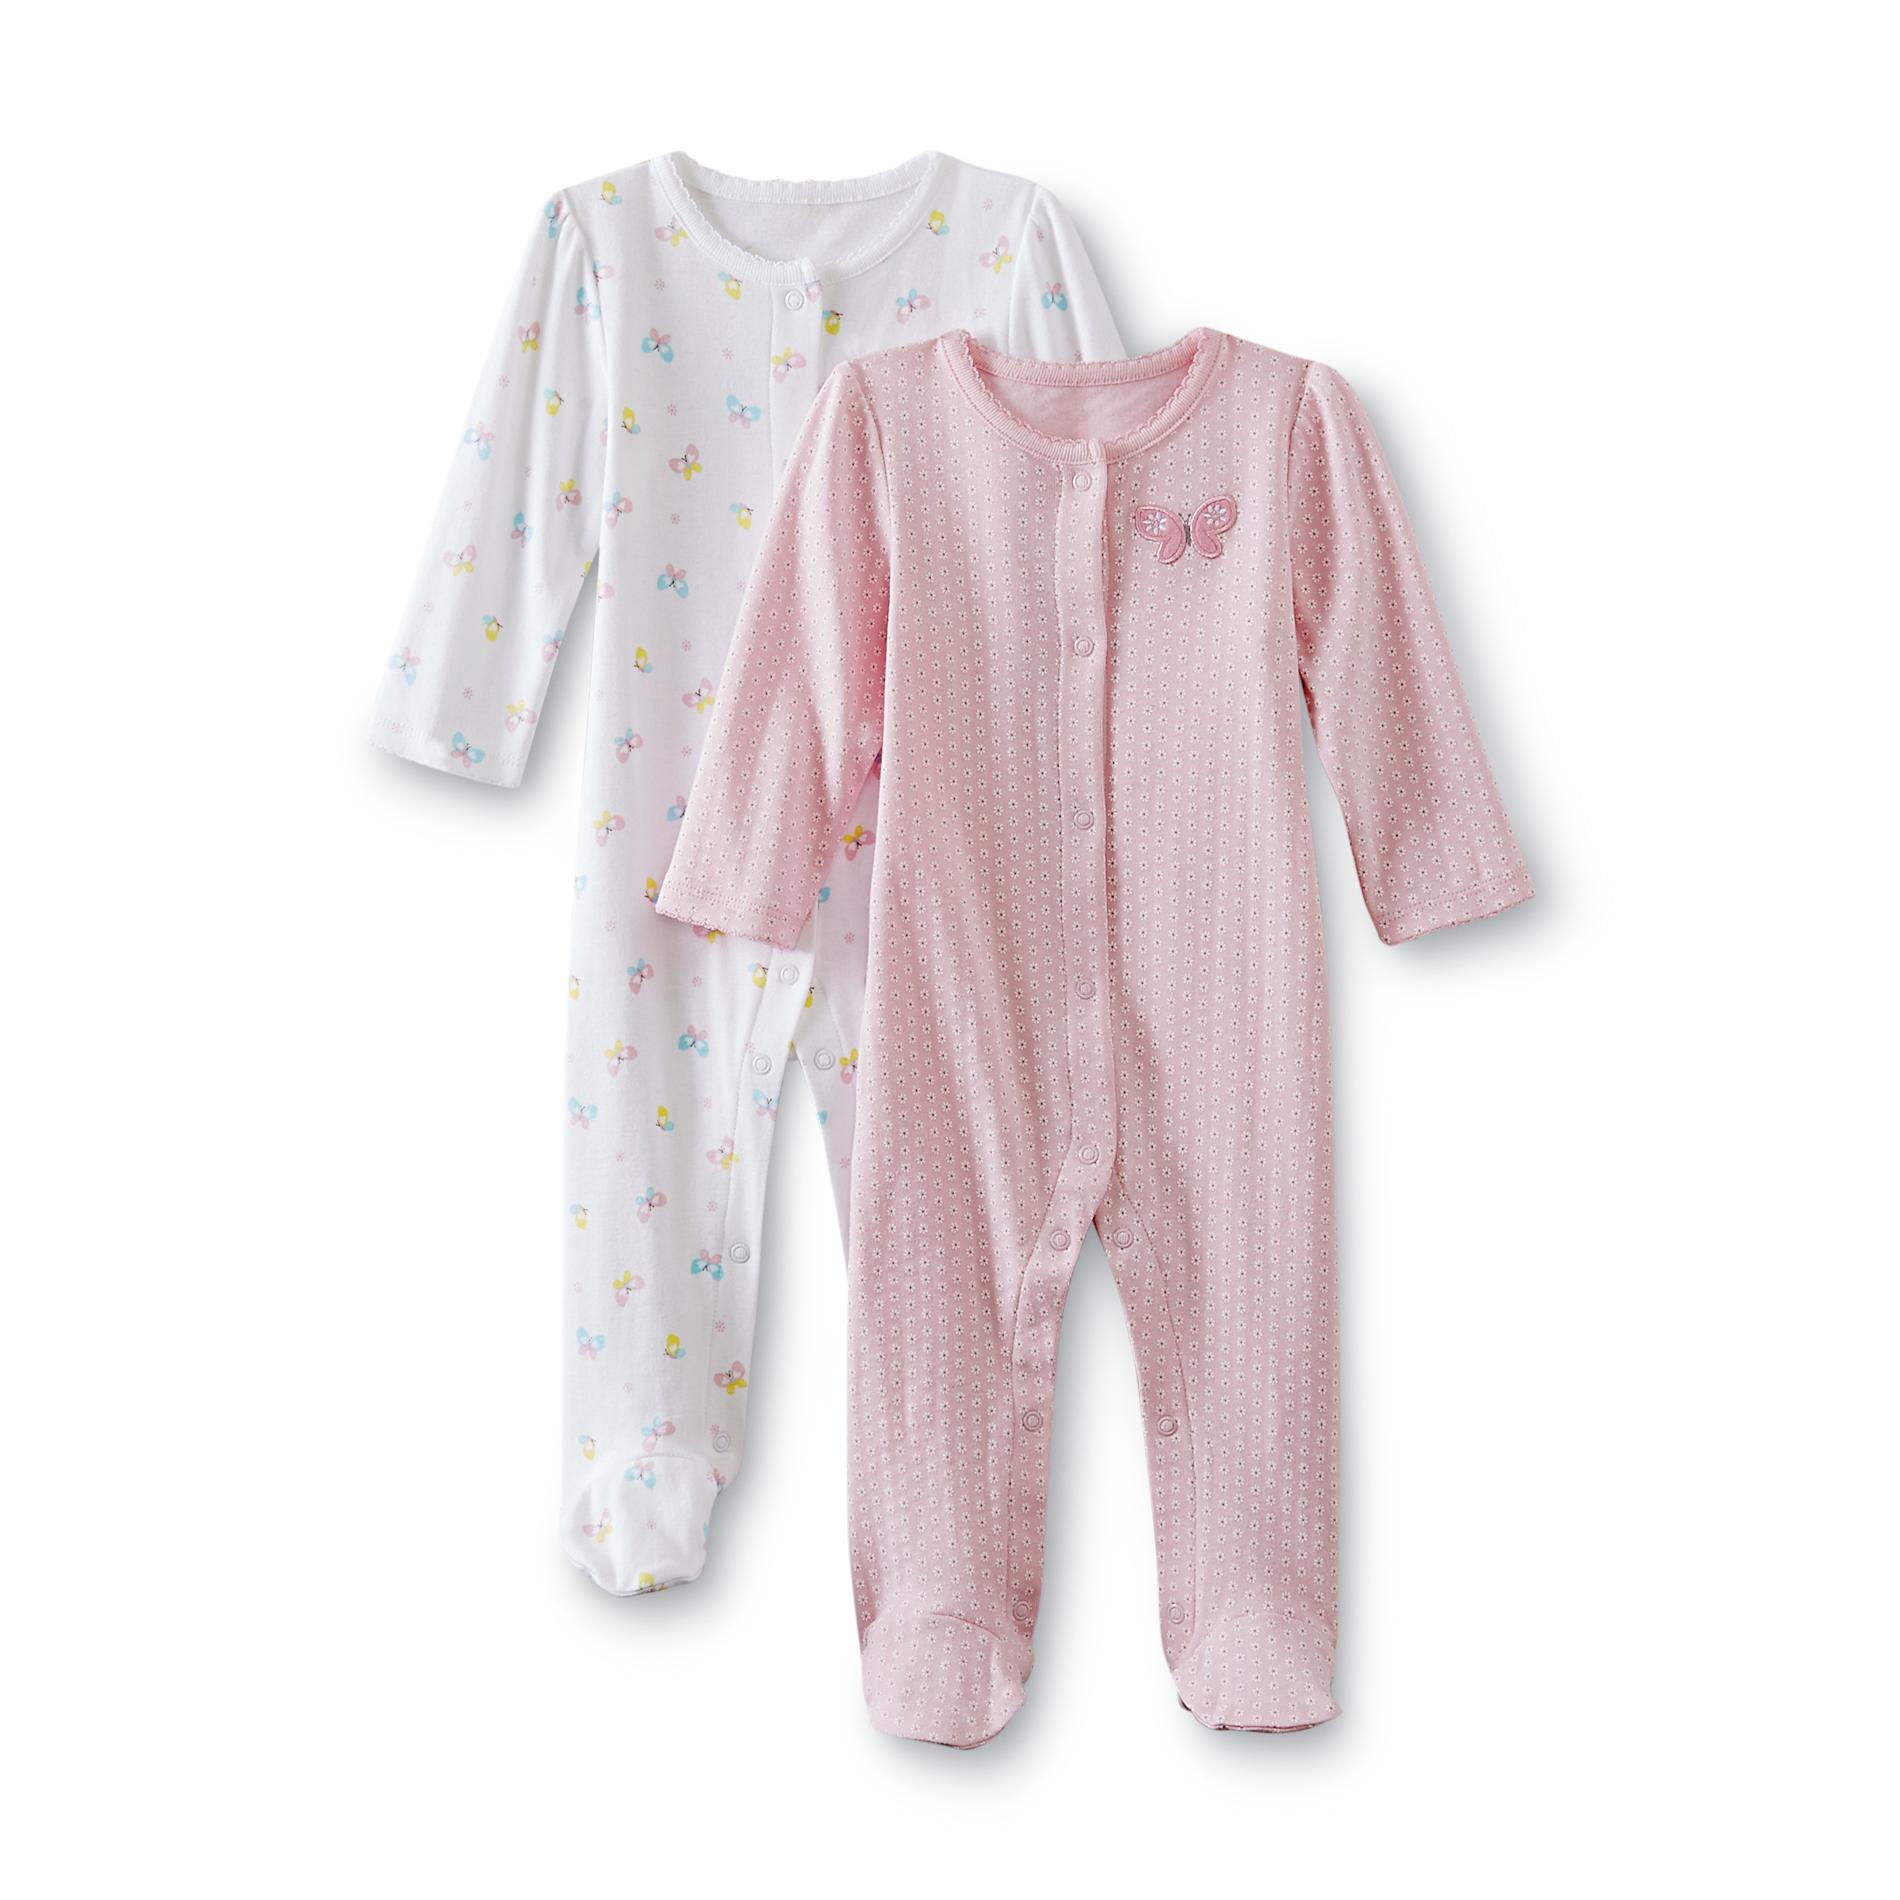 Small Wonders Newborn Girl's 2-Pack Footed Sleeper Pajamas - Butterfly